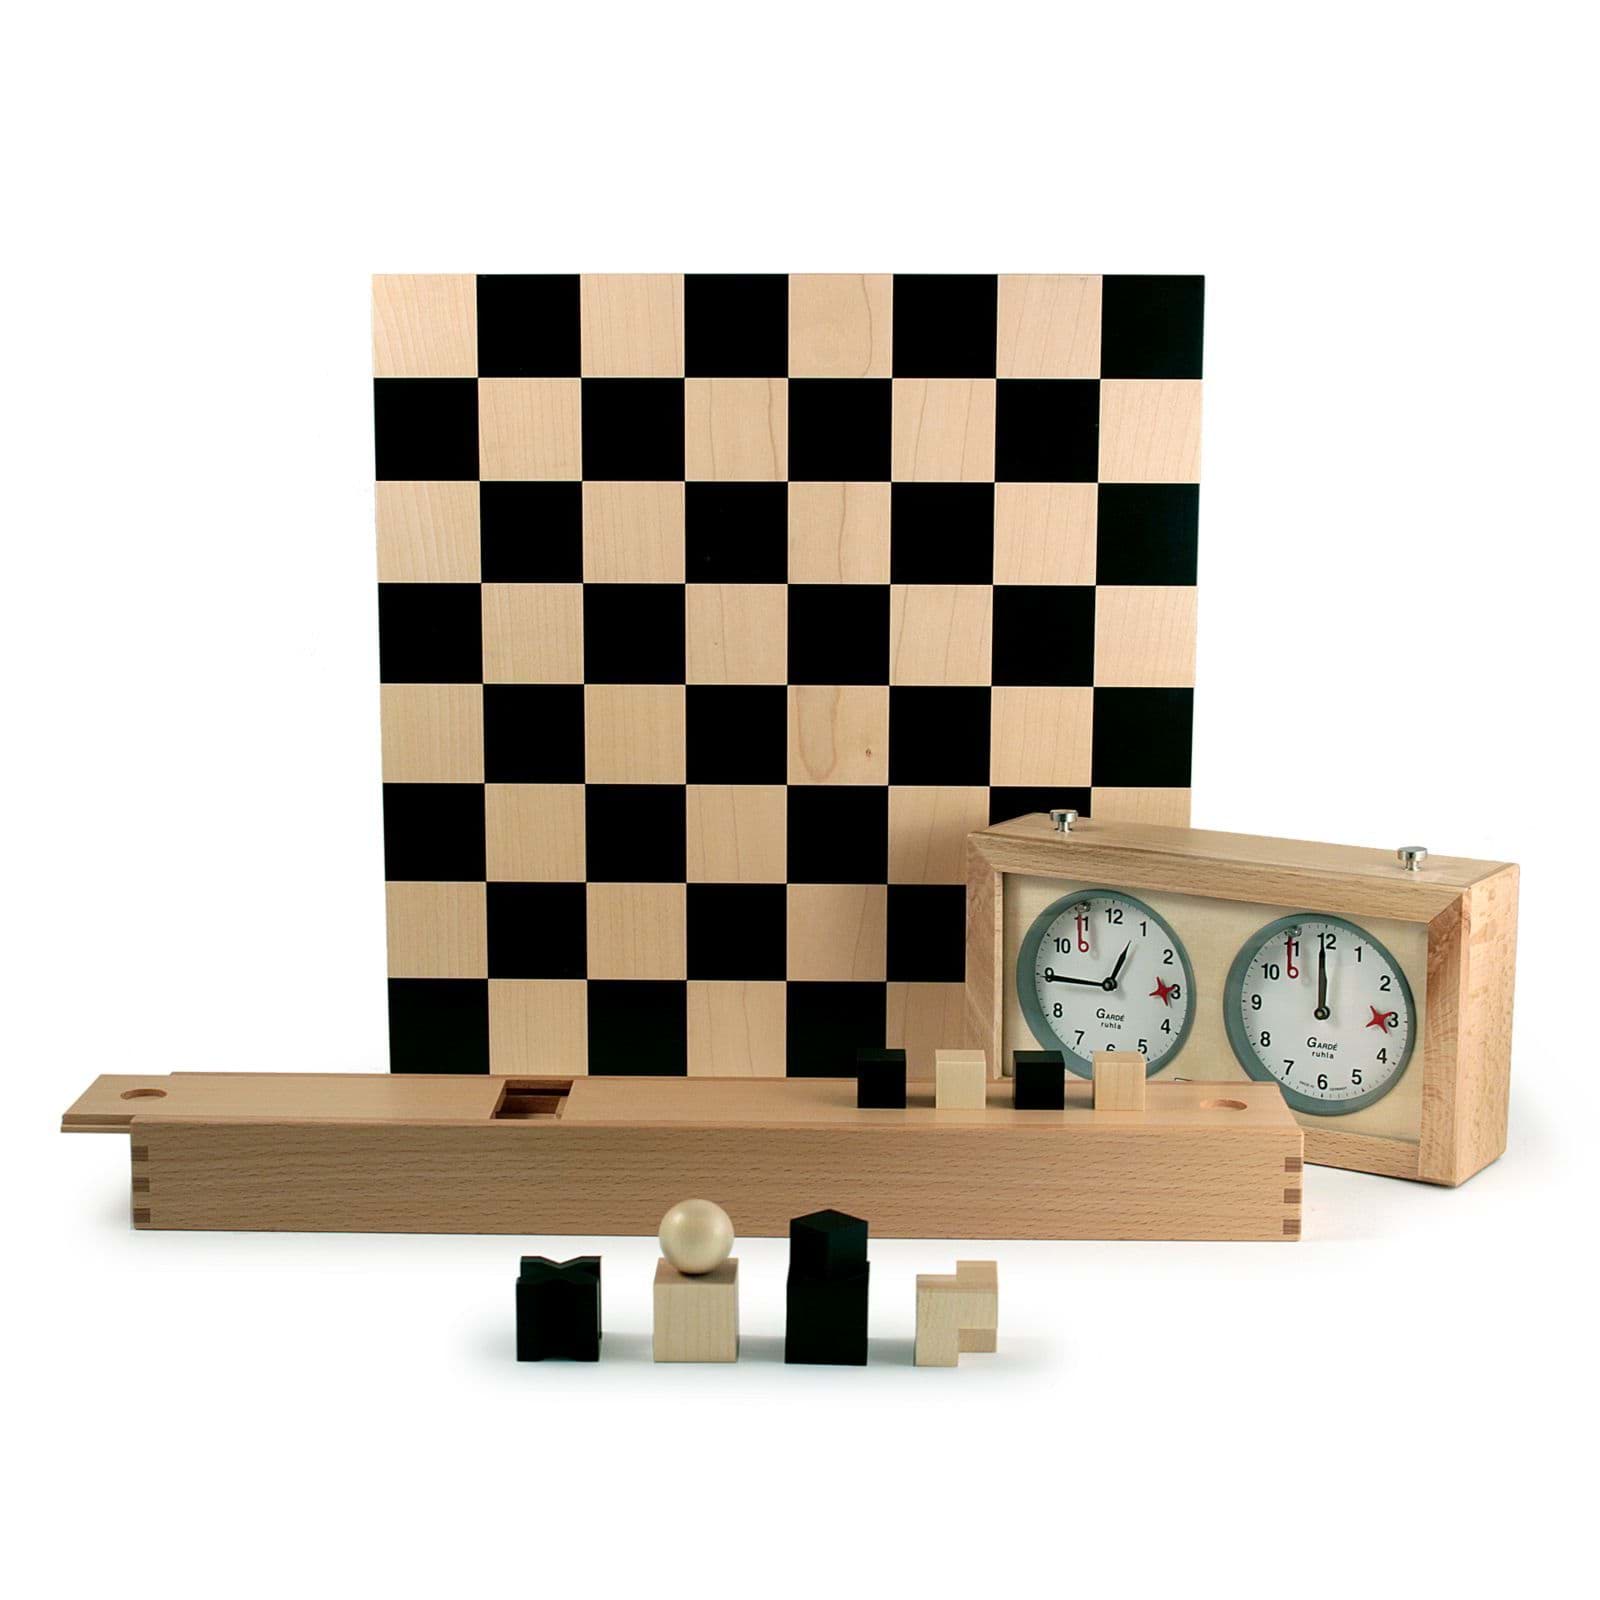 Image de Bauhaus Chess de Josef Hartwig + horloge d'échecs